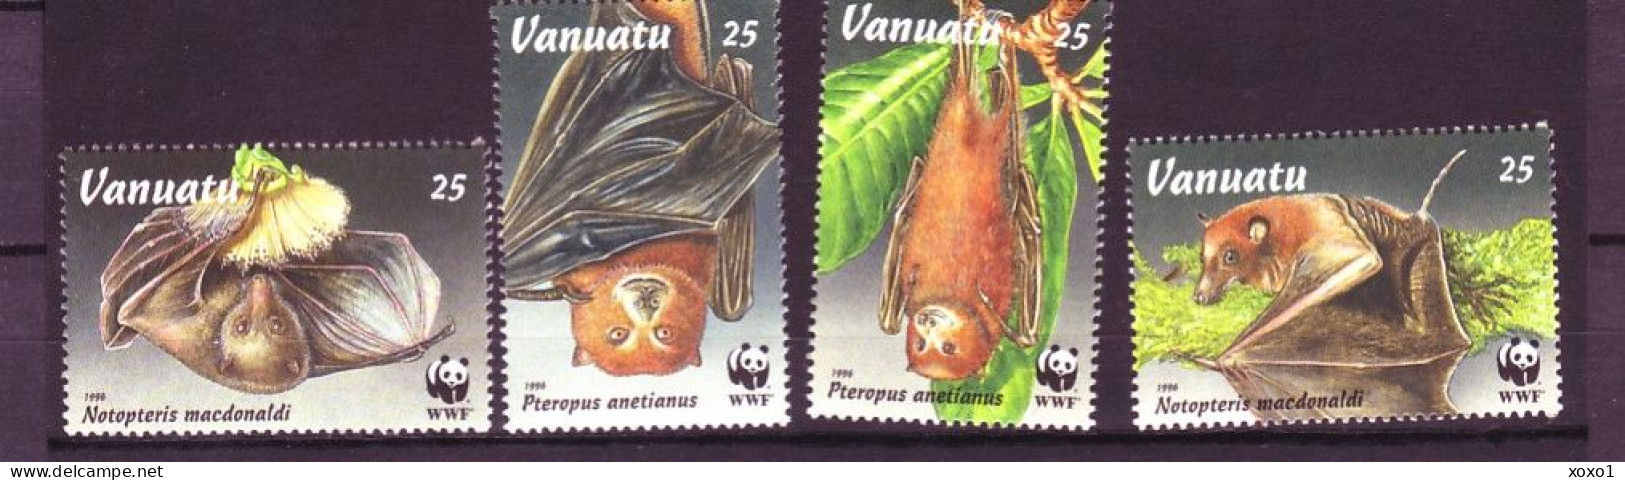 Vanuatu 1996 MiNr. 1004 - 1009 WWF Mammals Bats Insular Flying Fox, Fijian Blossom Bat  4v  MNH** 3.60 € - Neufs